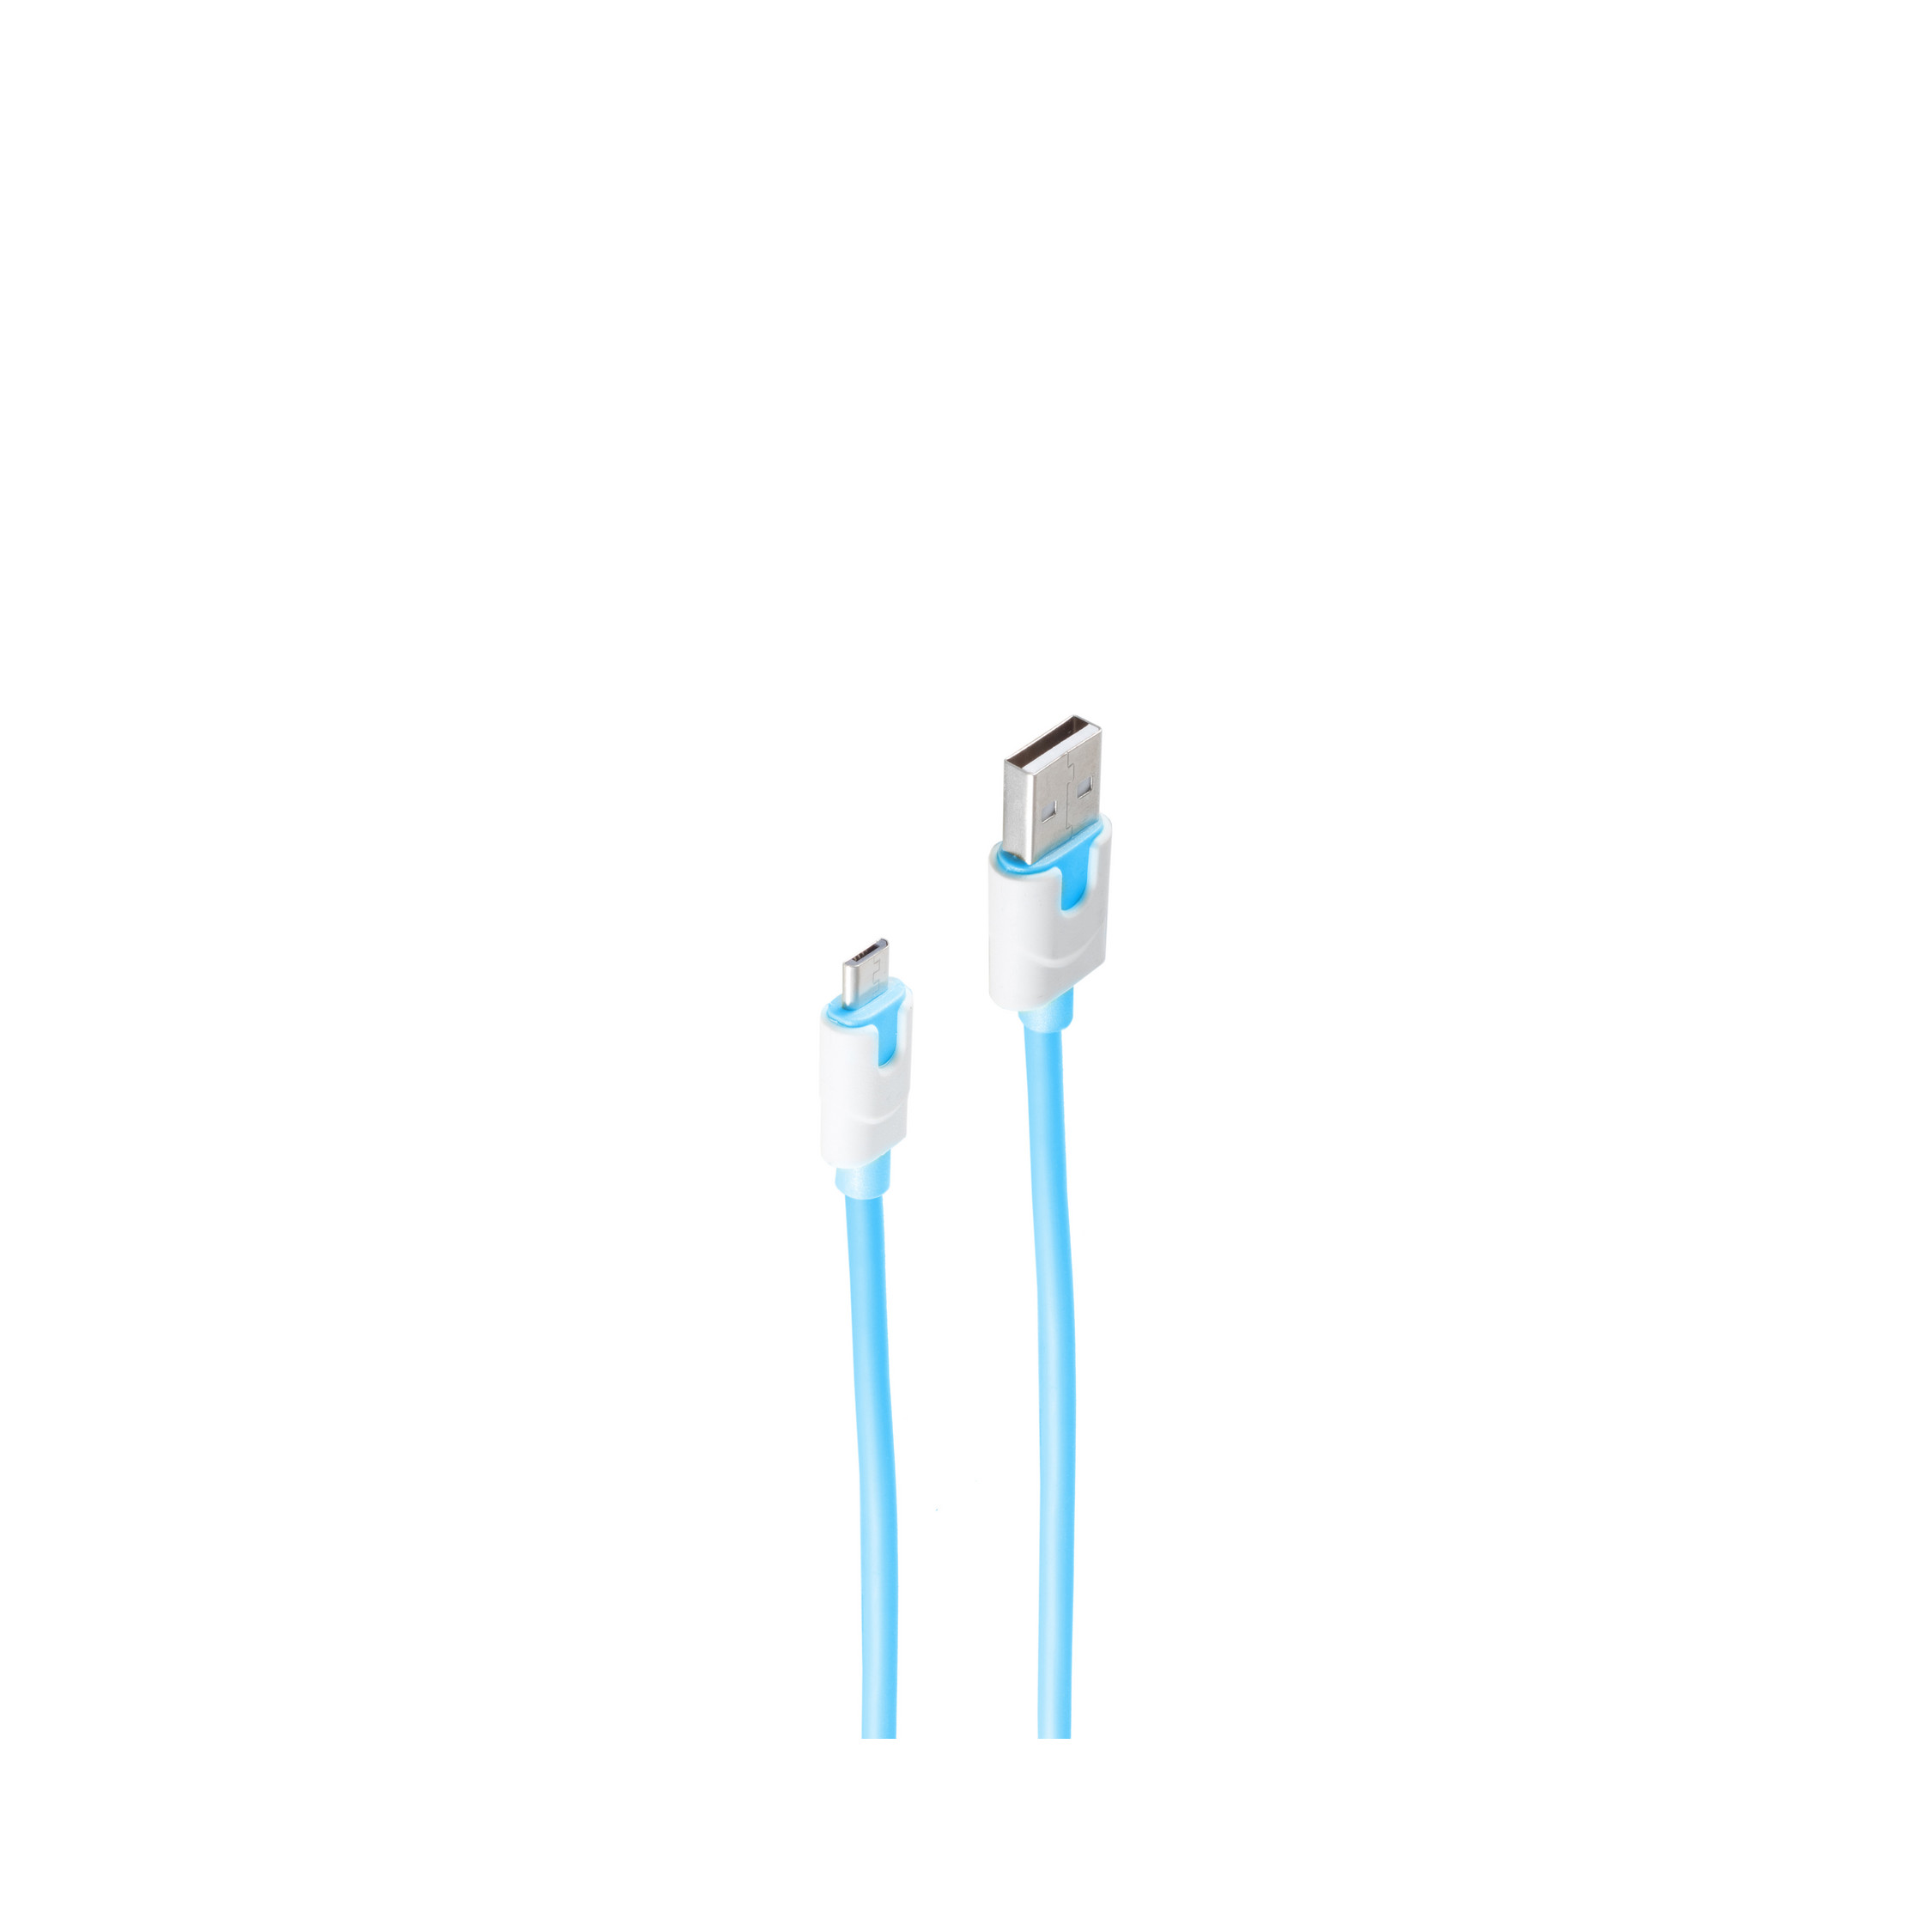 SHIVERPEAKS USB-Ladekabel A Stecker Ladekabel, 2m, USB Micro auf m, blau 2 blau, USB B